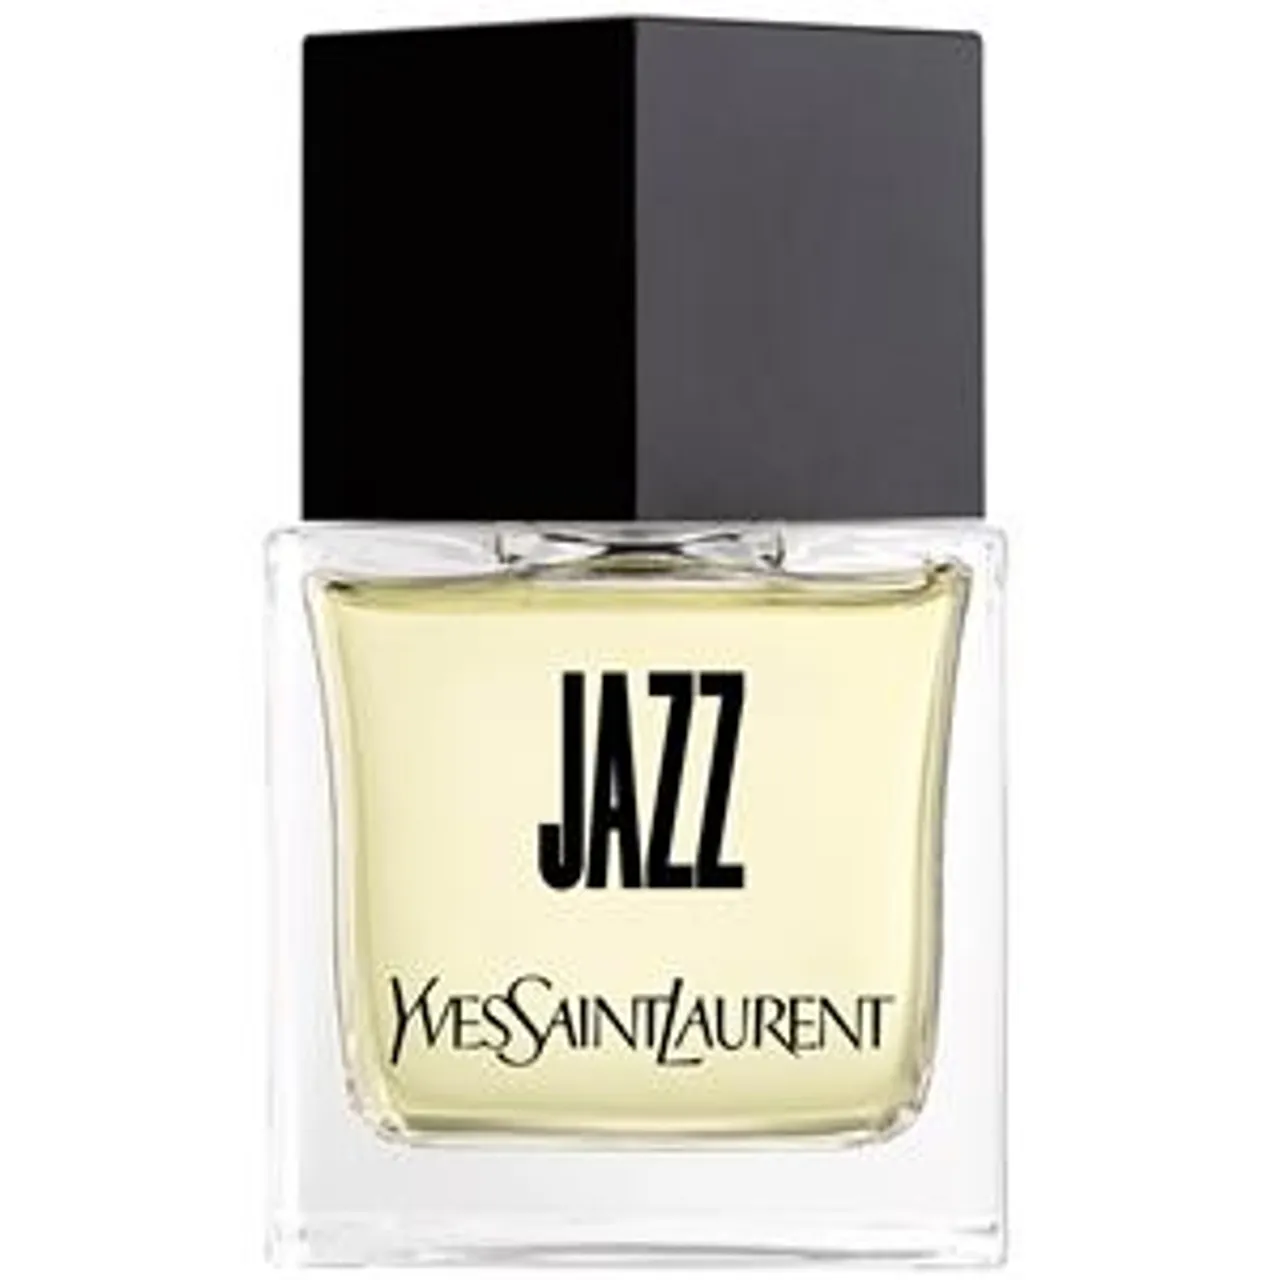 Yves Saint Laurent Jazz Eau de Toilette Spray Parfum Herren